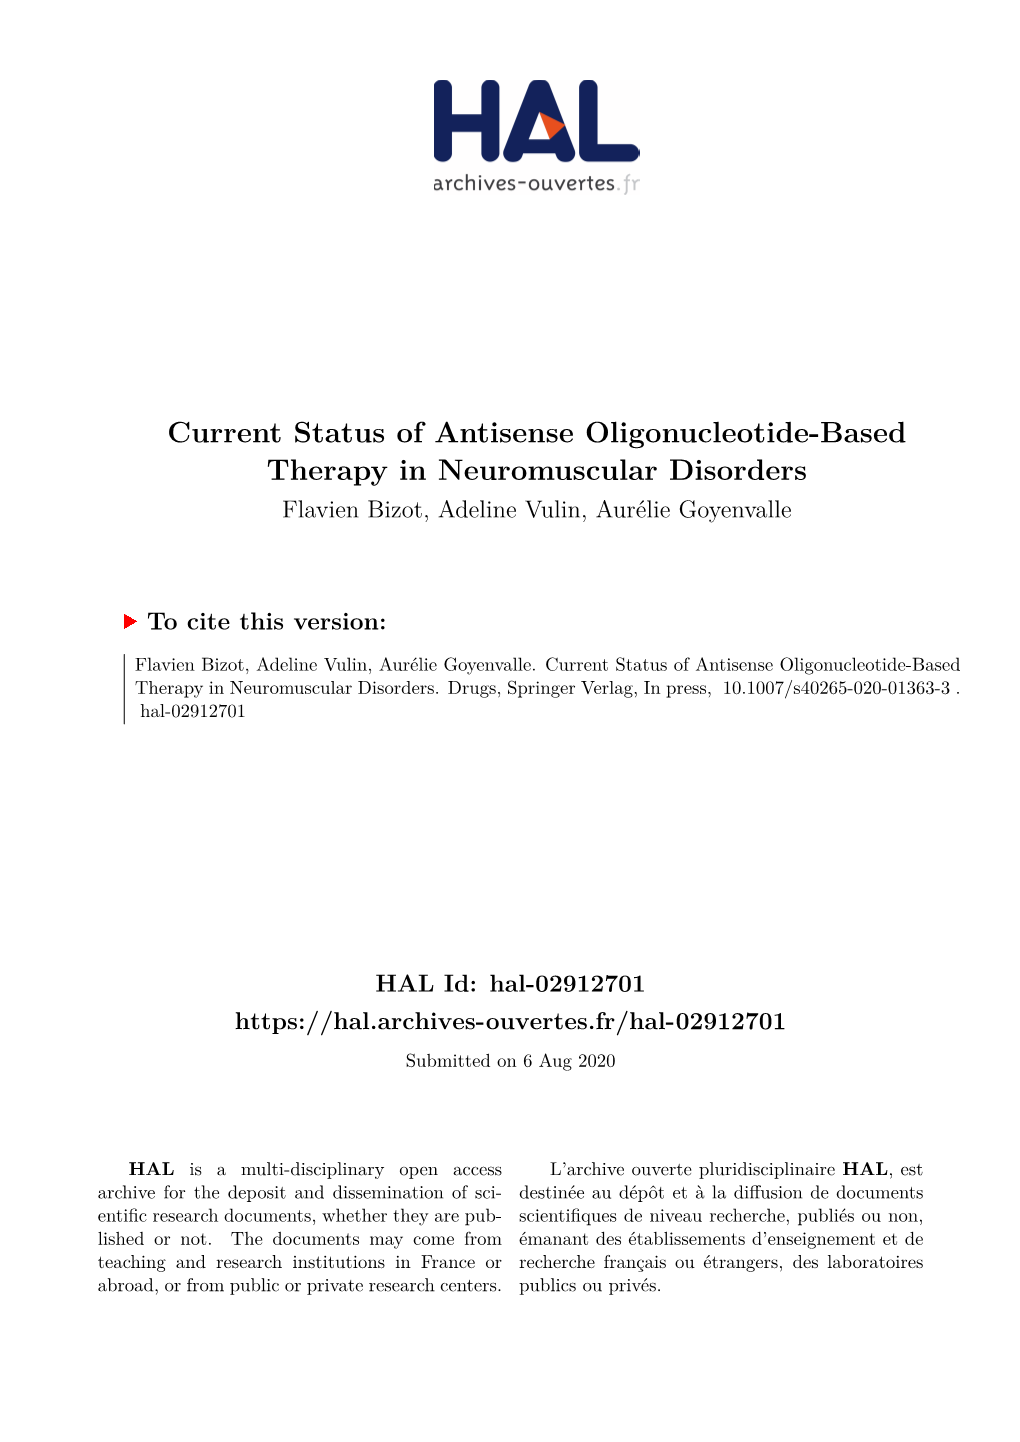 Current Status of Antisense Oligonucleotide-Based Therapy in Neuromuscular Disorders Flavien Bizot, Adeline Vulin, Aurélie Goyenvalle